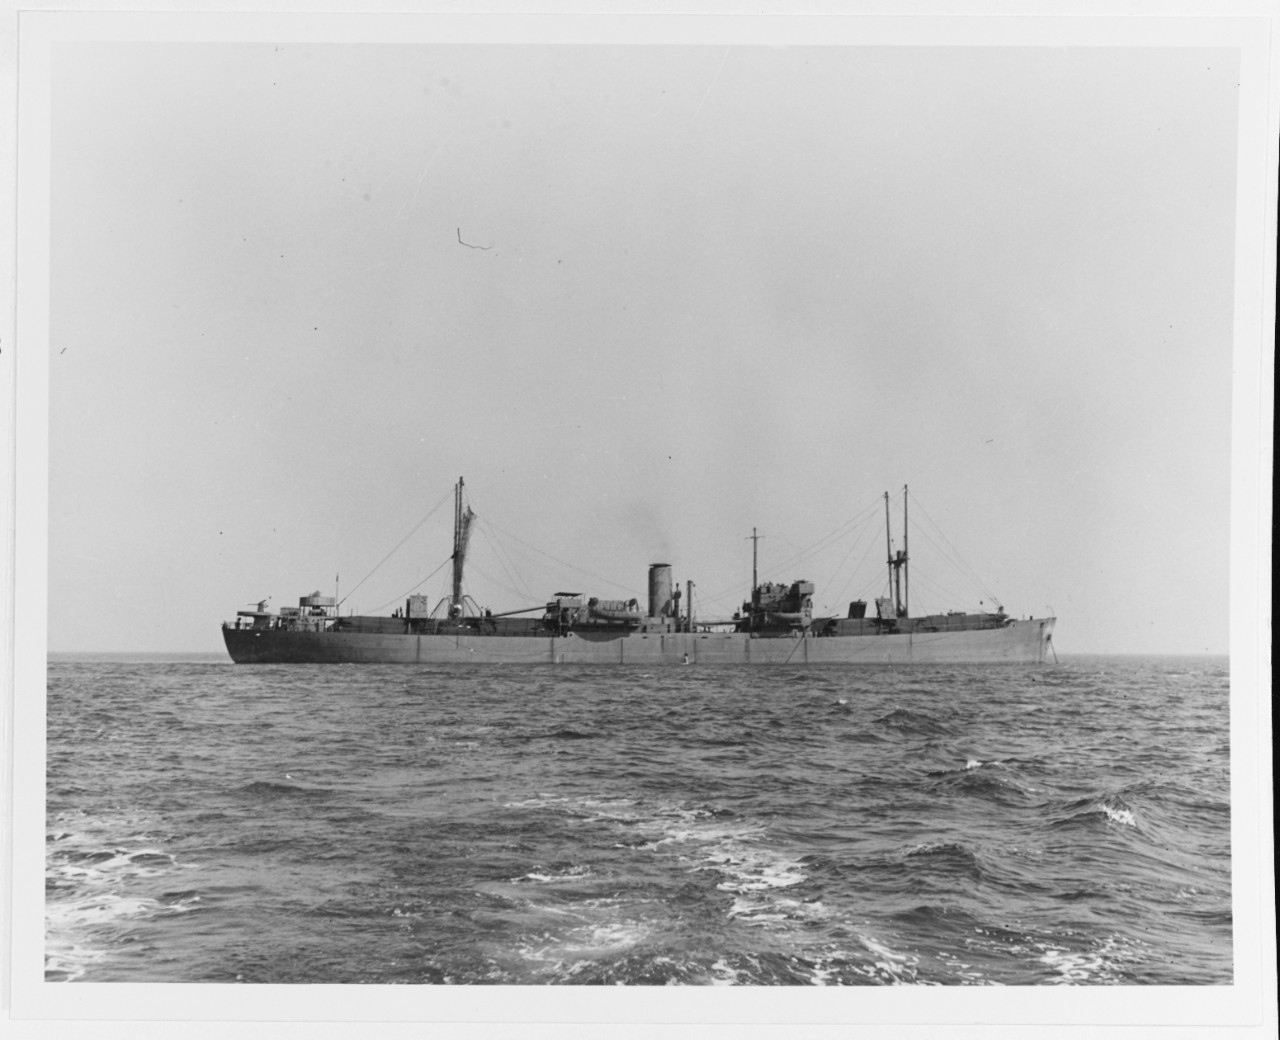 S.S. FORT LIARD (British Merchant Freighter, 1942-1958)